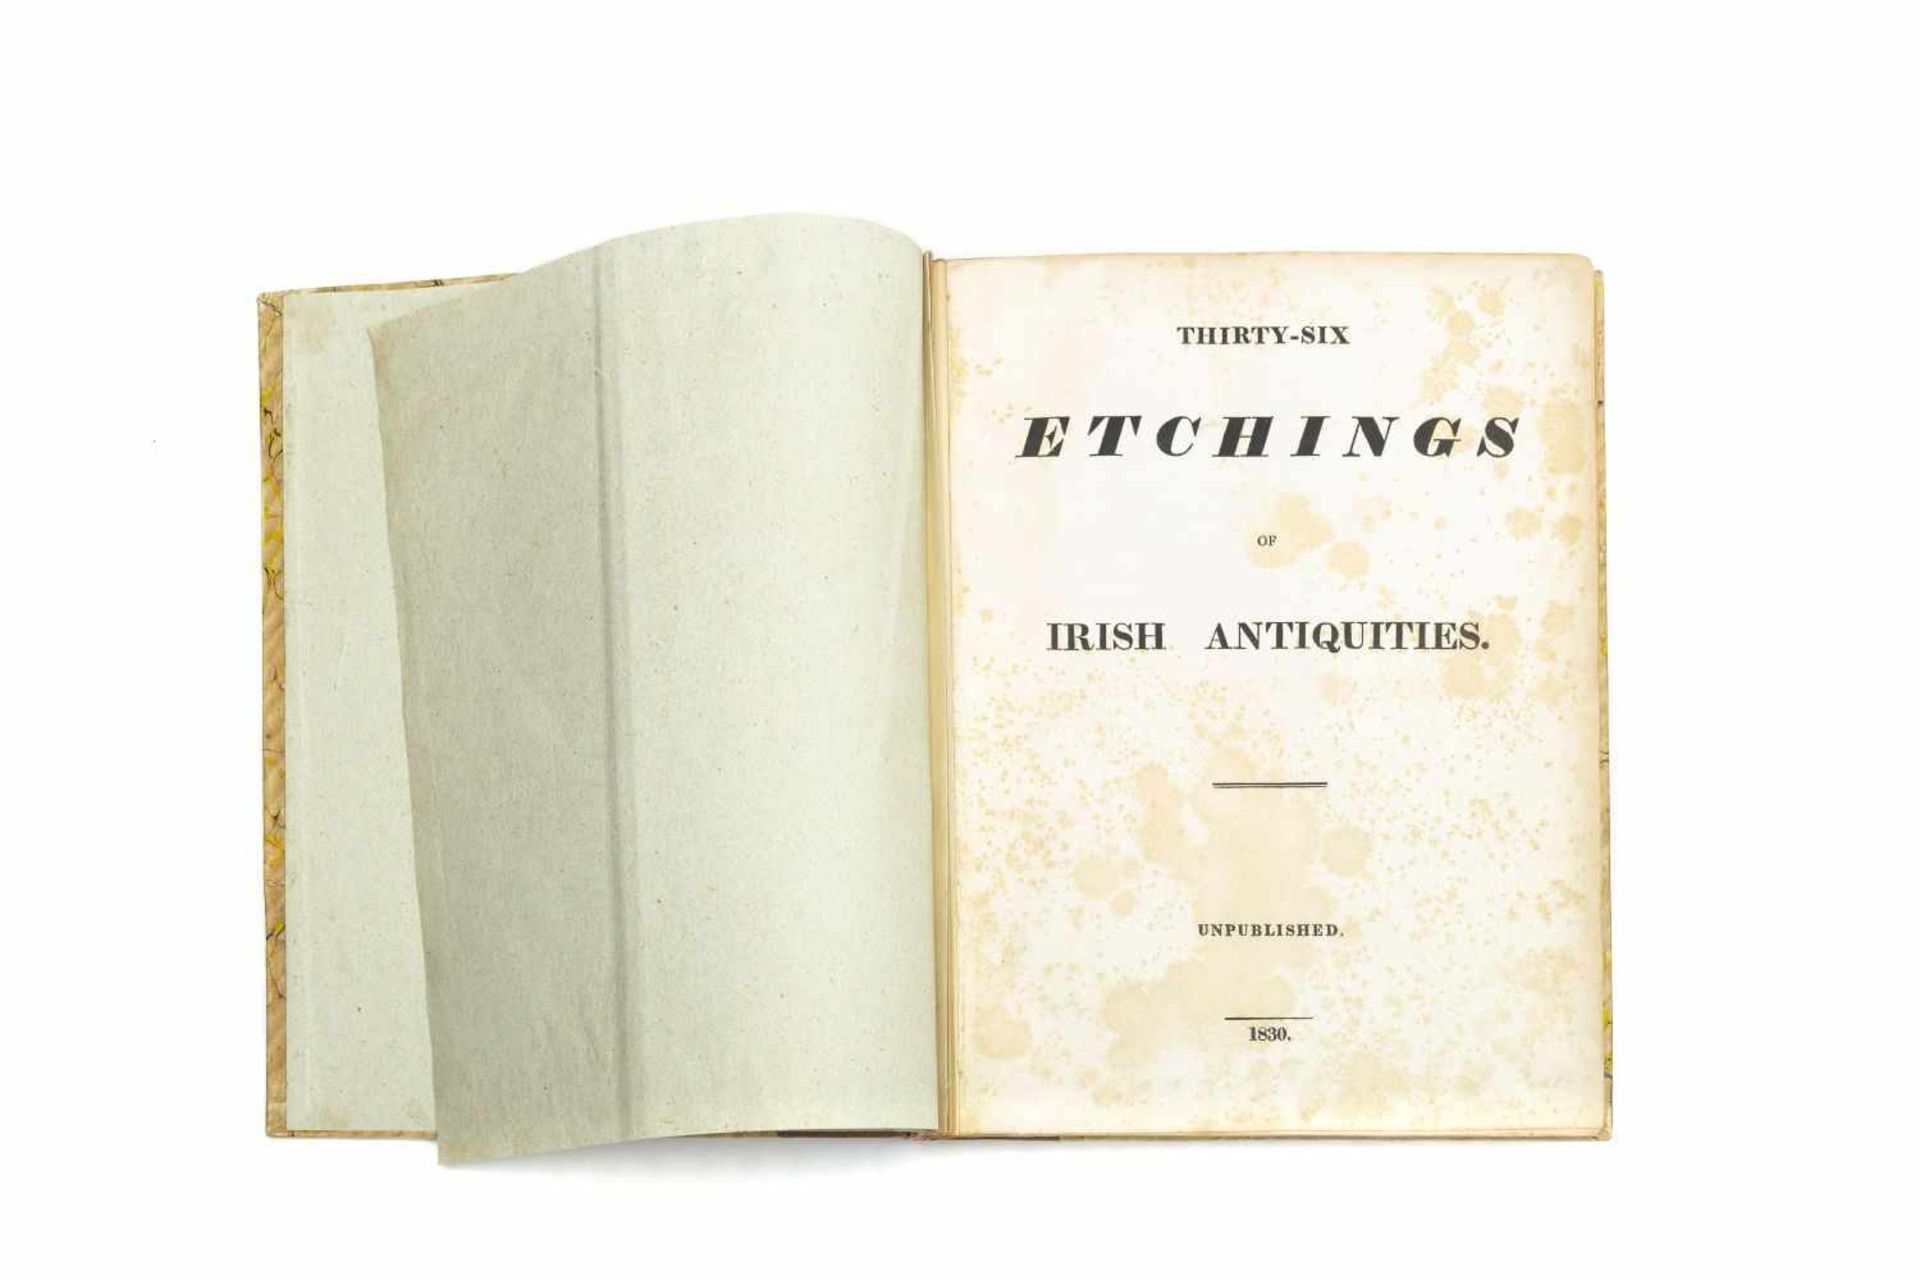 IRELANDThirty-six etchings of Irish Antiquities. Unpublished. [Privately printed] 1830. 4°. Titelbl,